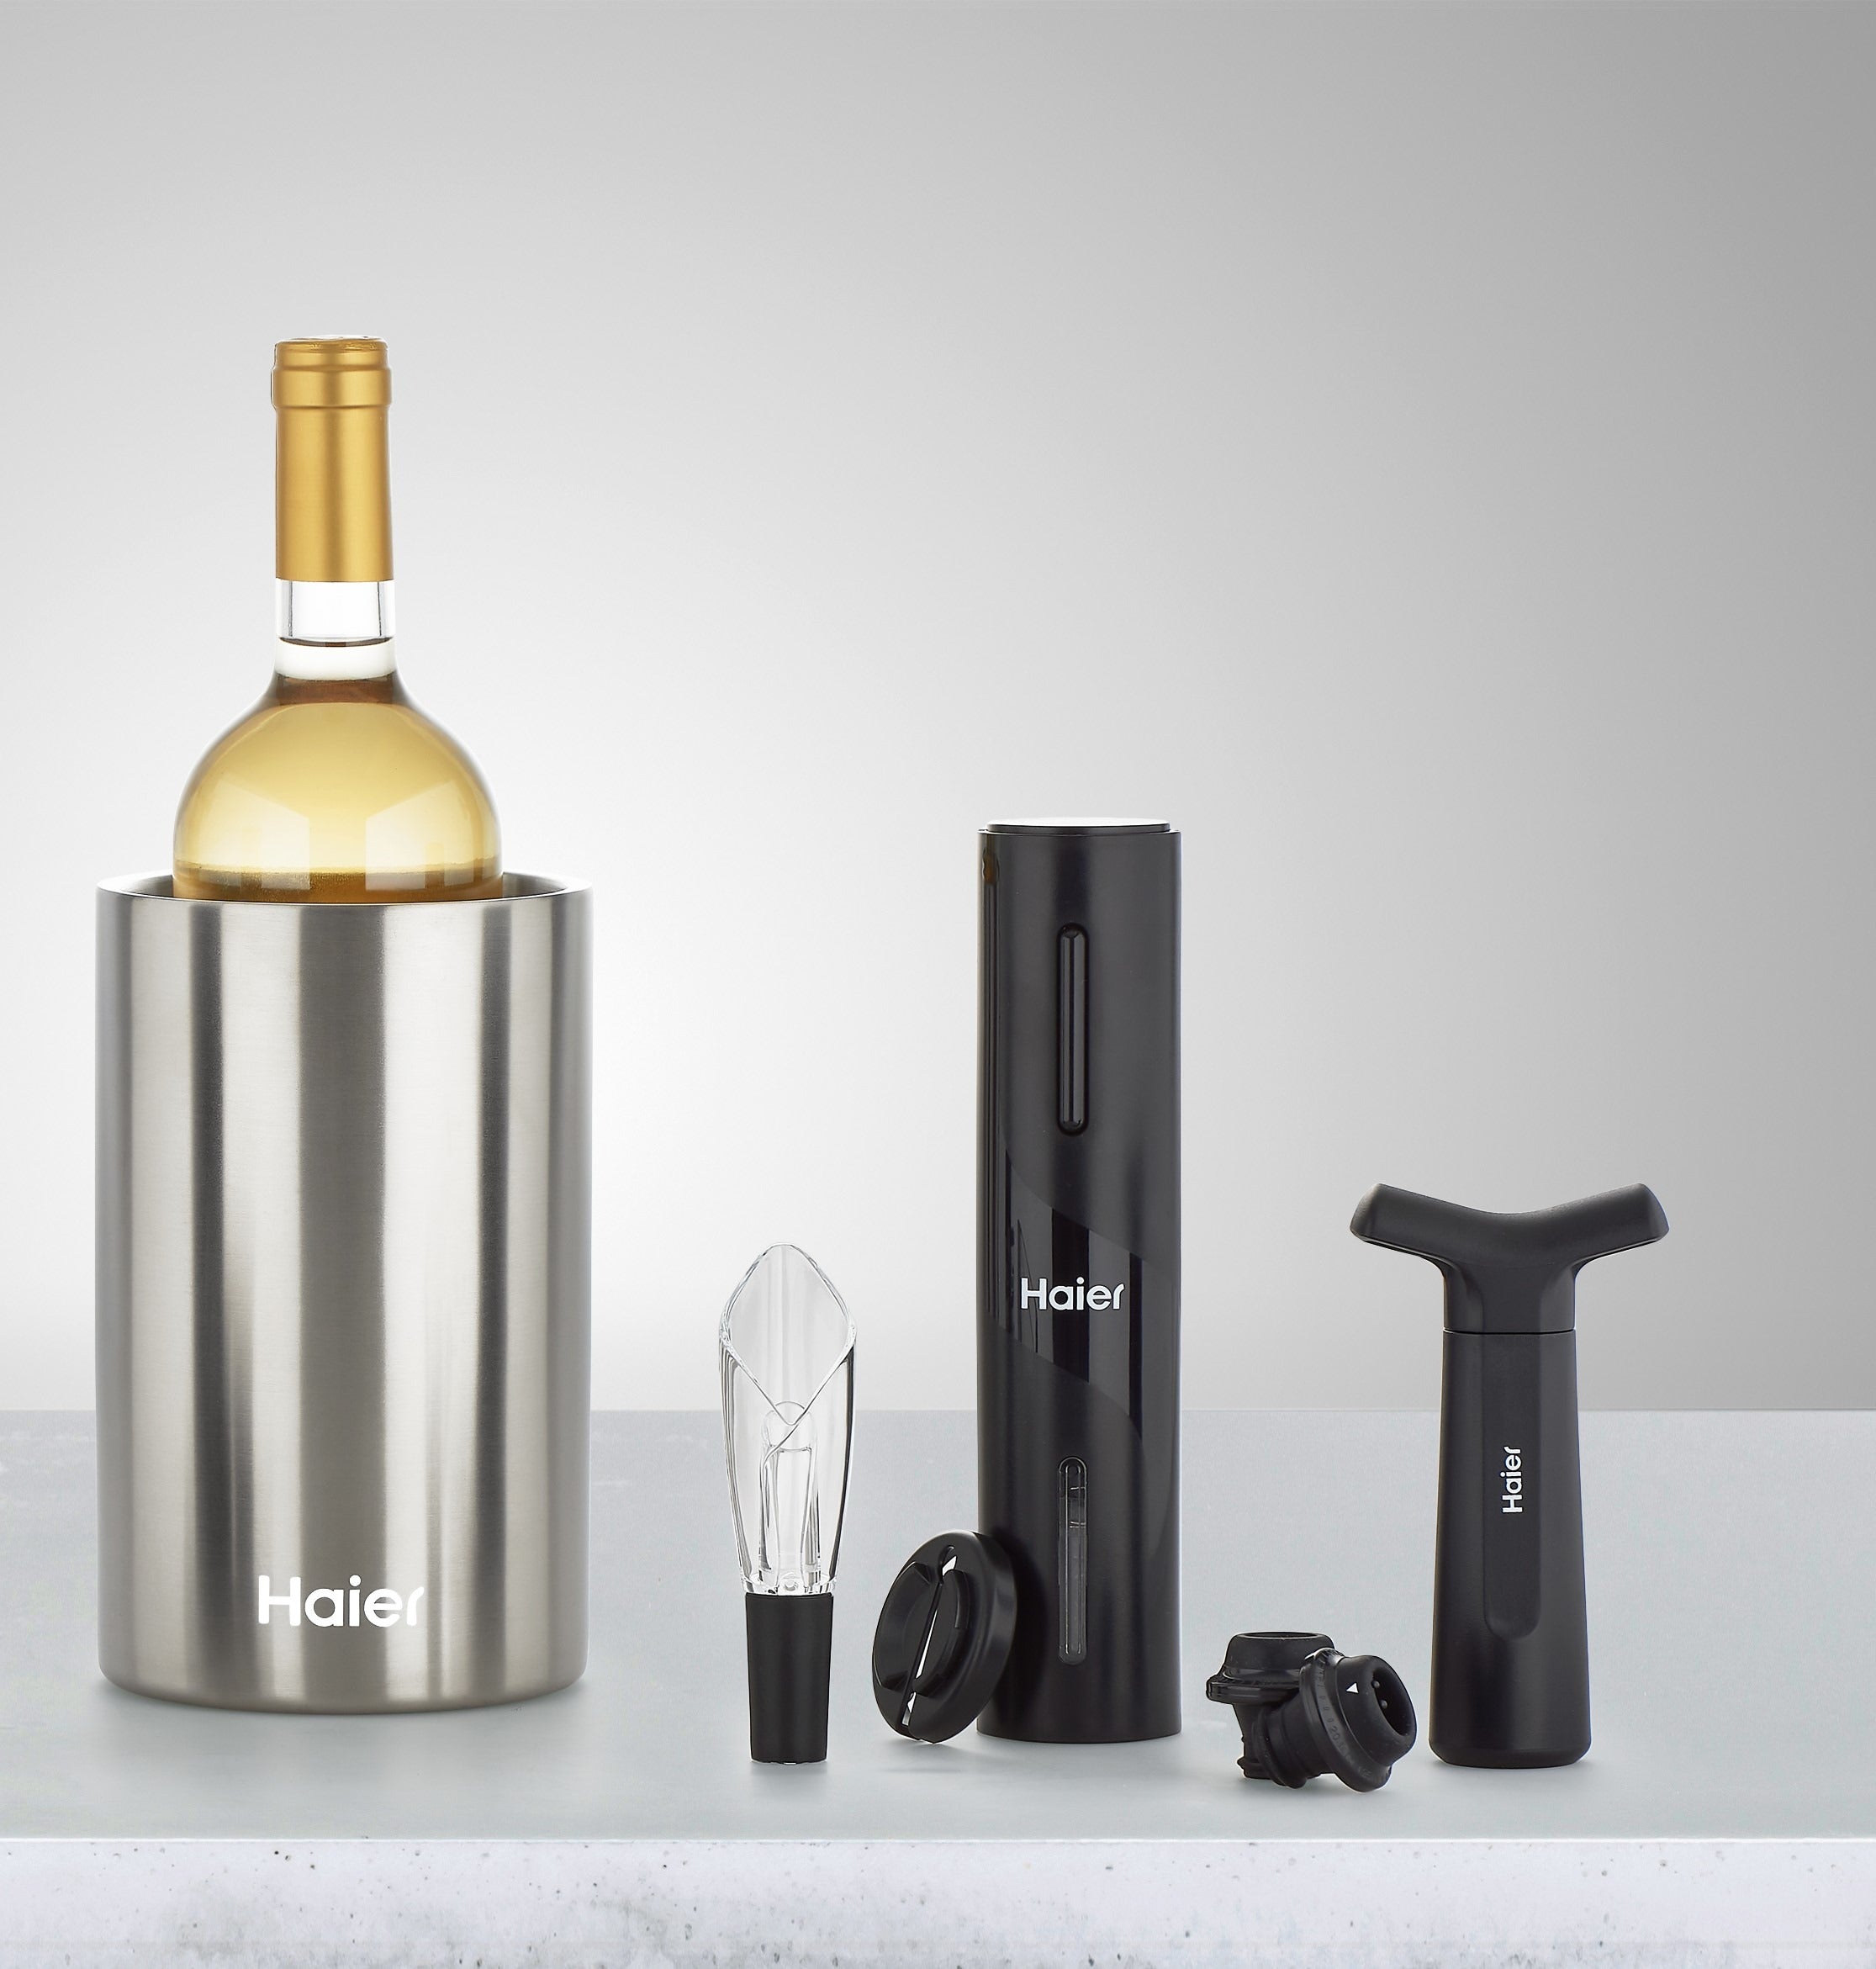 Haier Wine Accessory Bundle : Rechargeable Electric Wine set + Wine Bucket